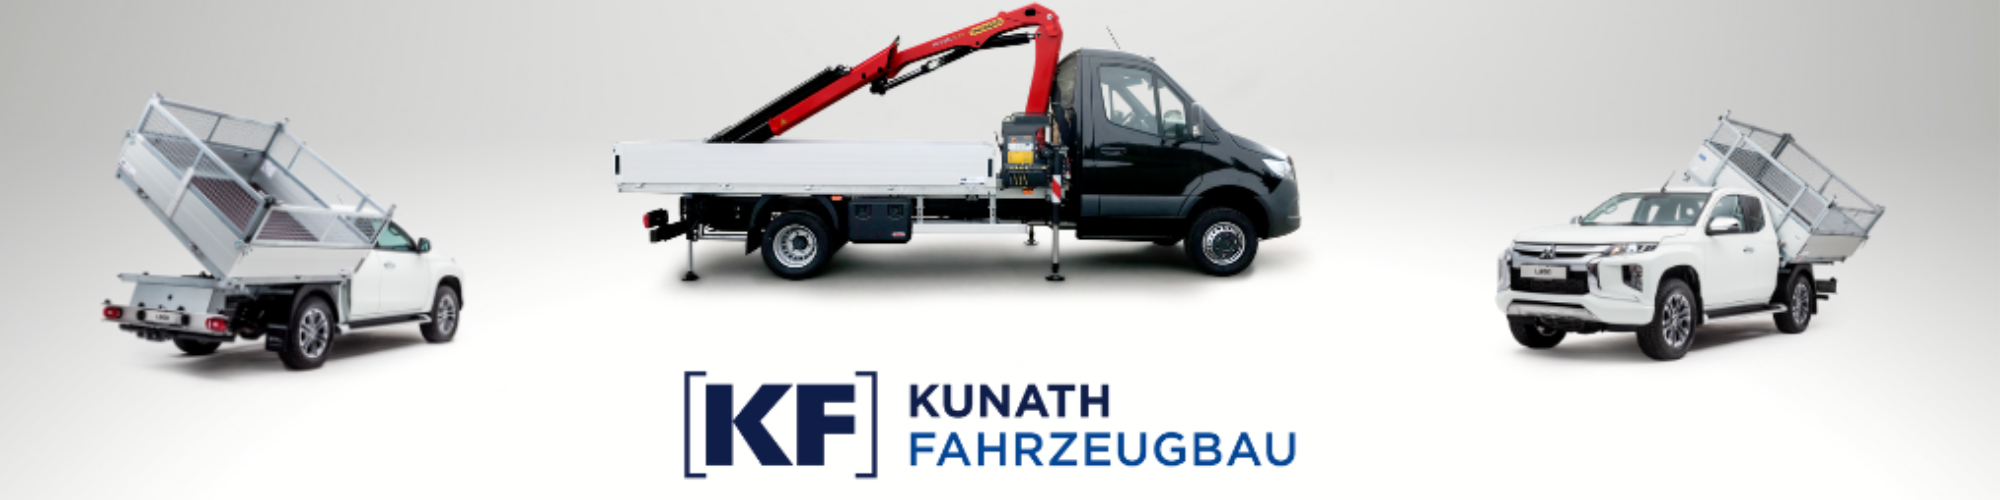 Kunath Fahrzeugbau GmbH